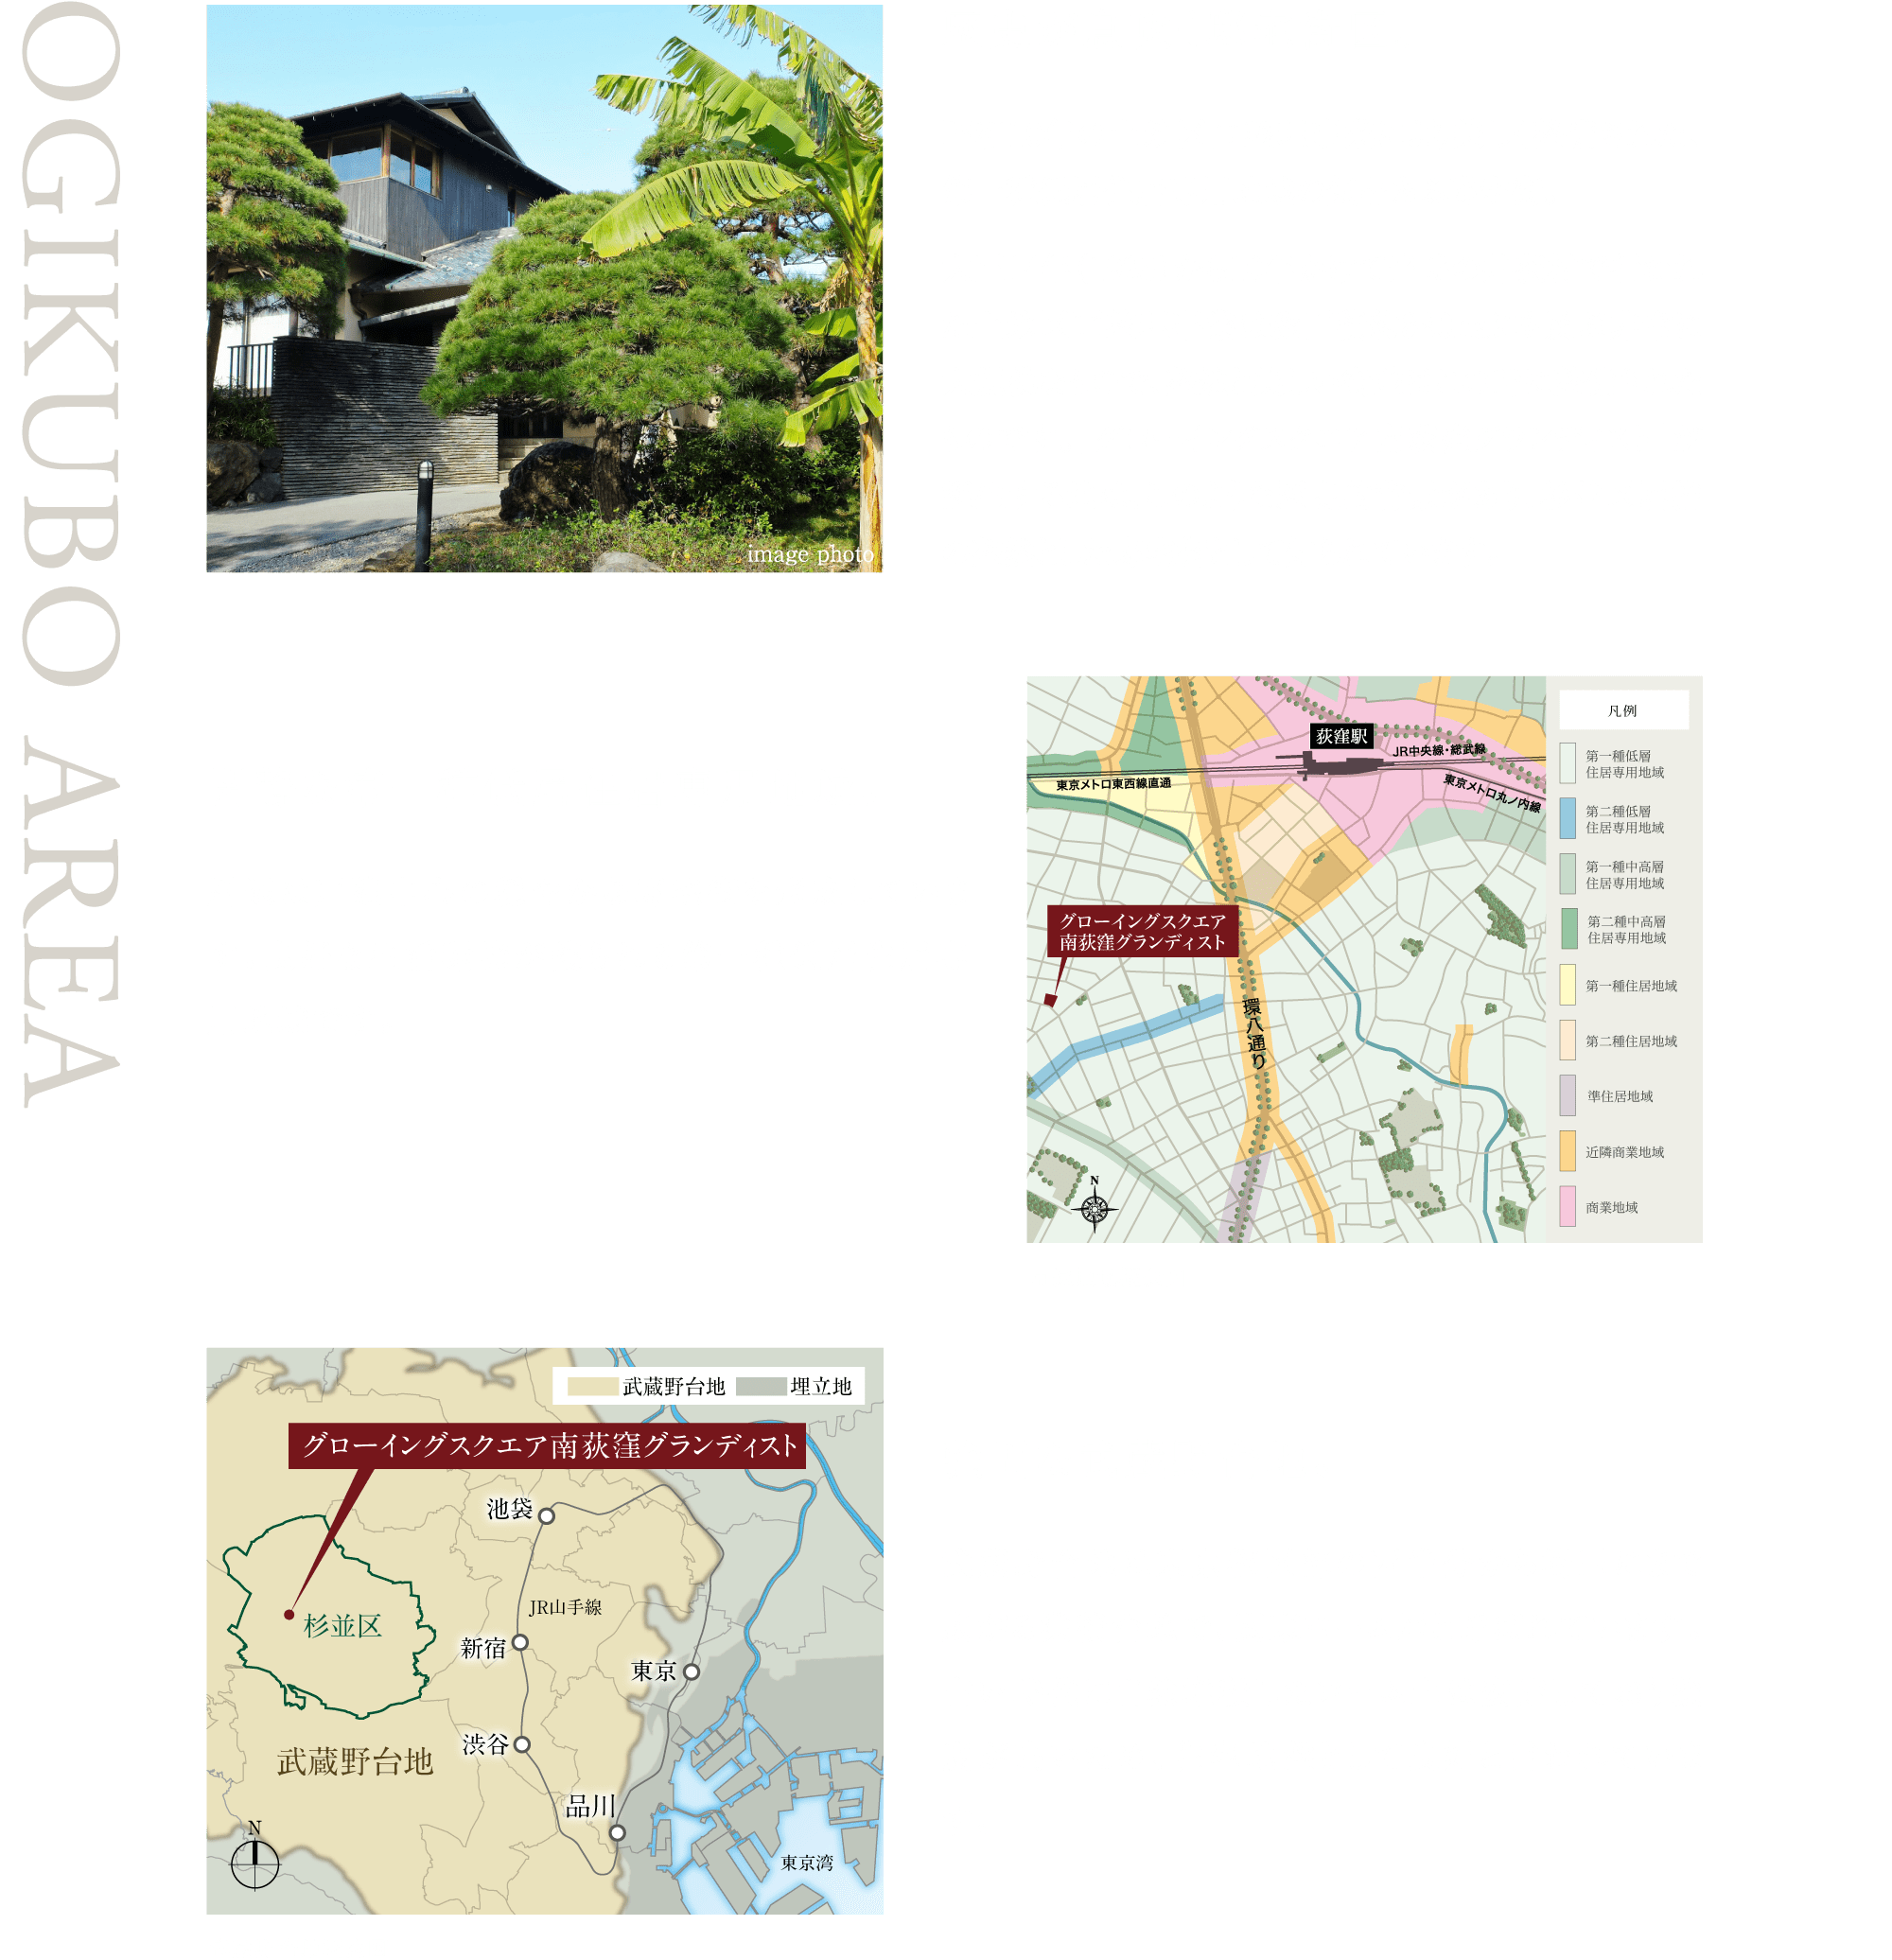 OGIKUBO AREA